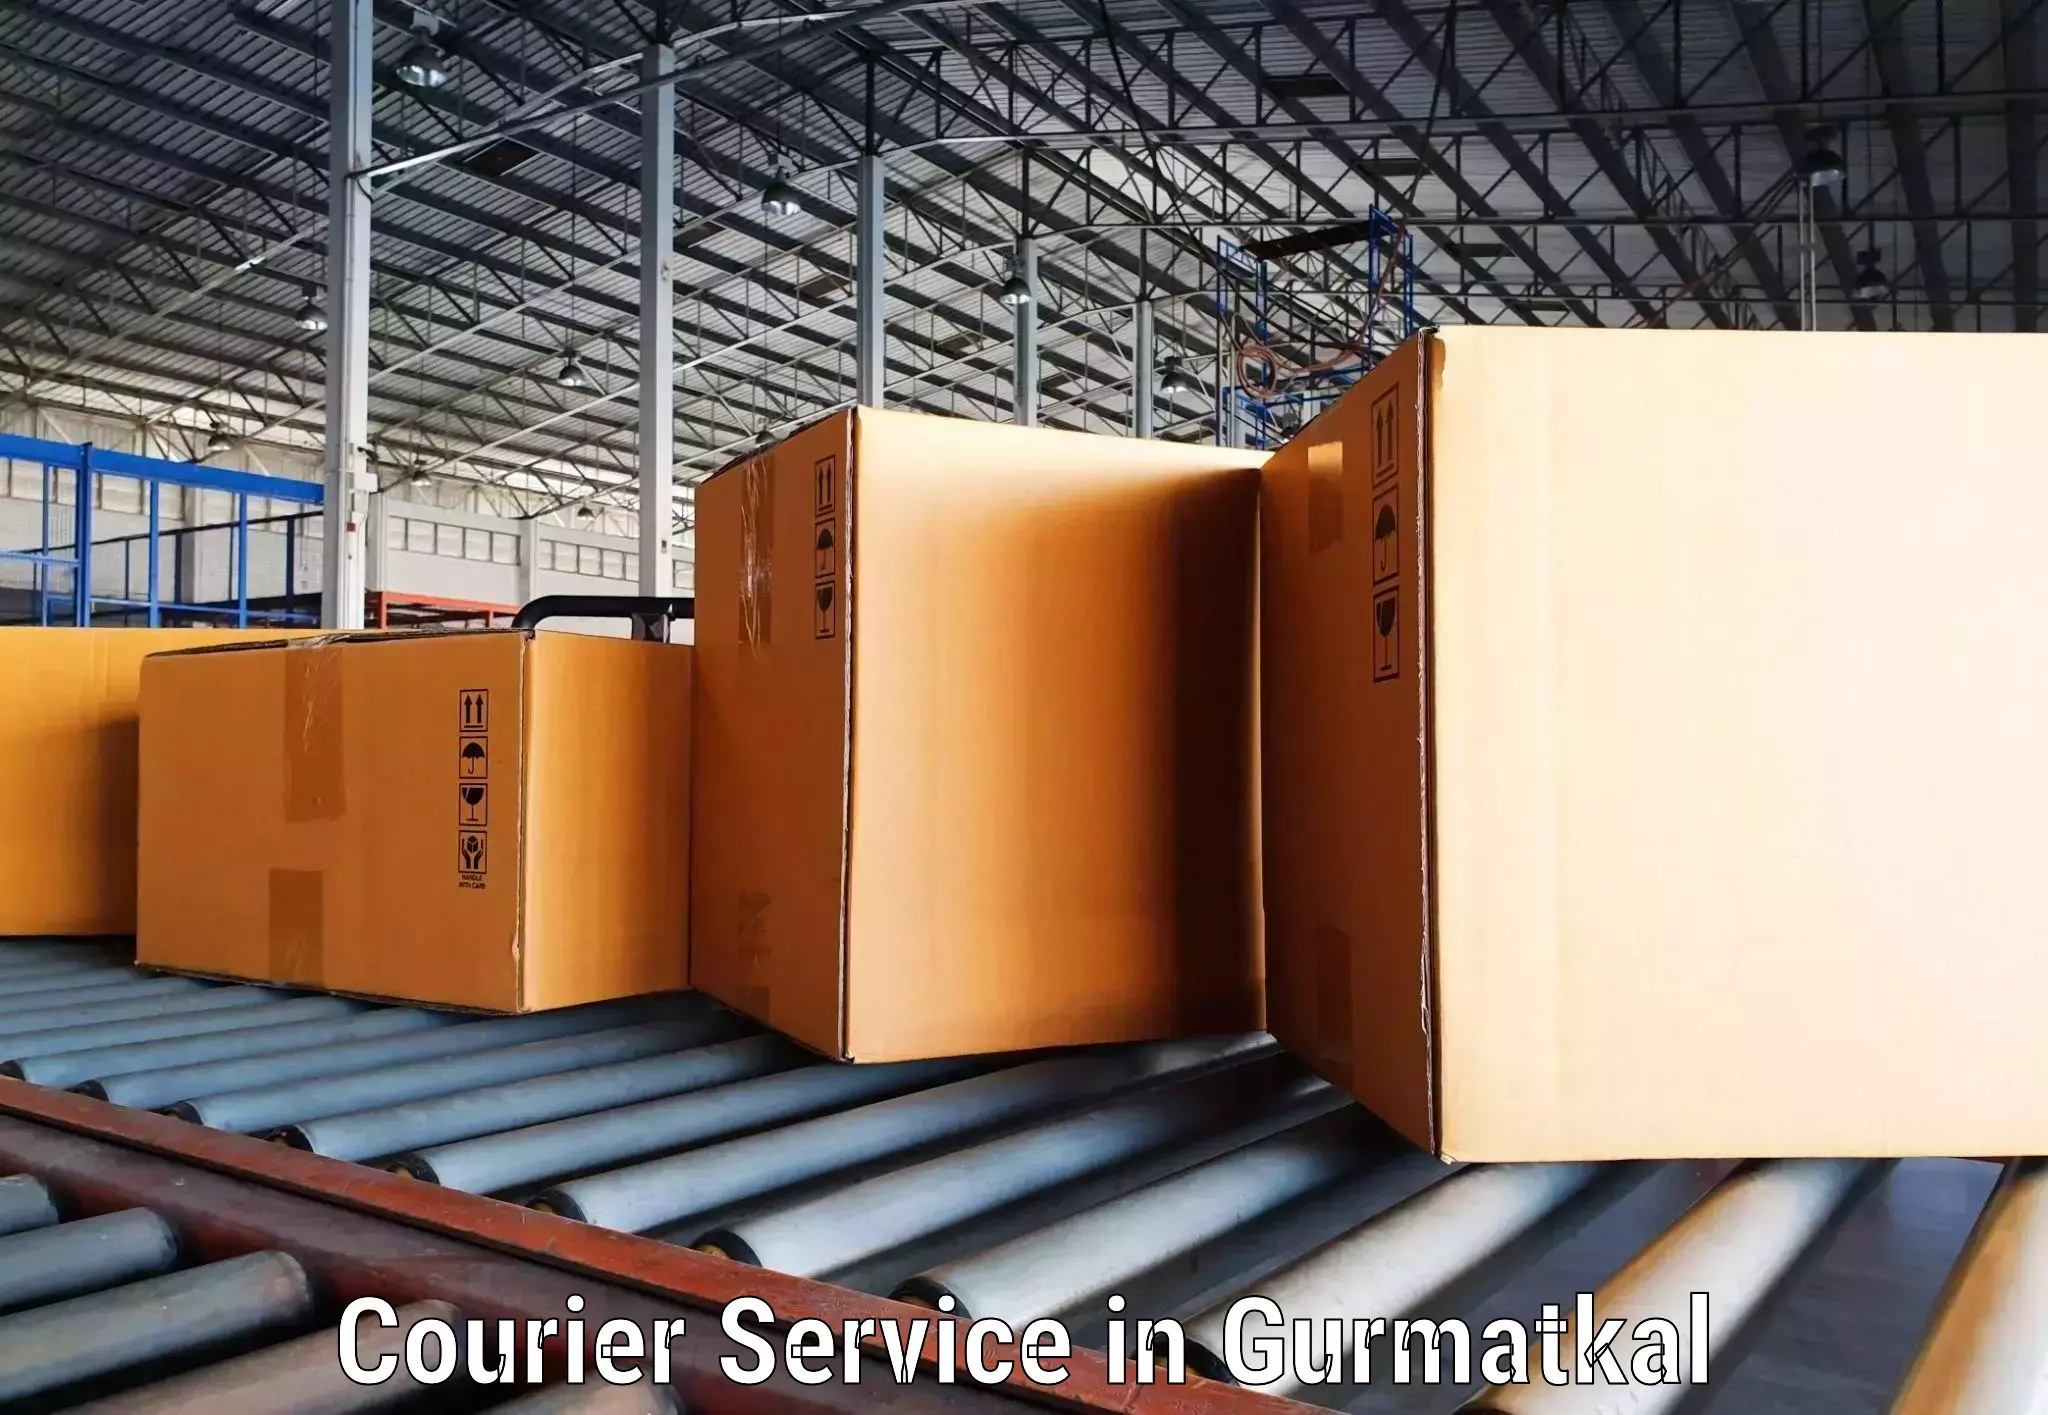 Express courier capabilities in Gurmatkal